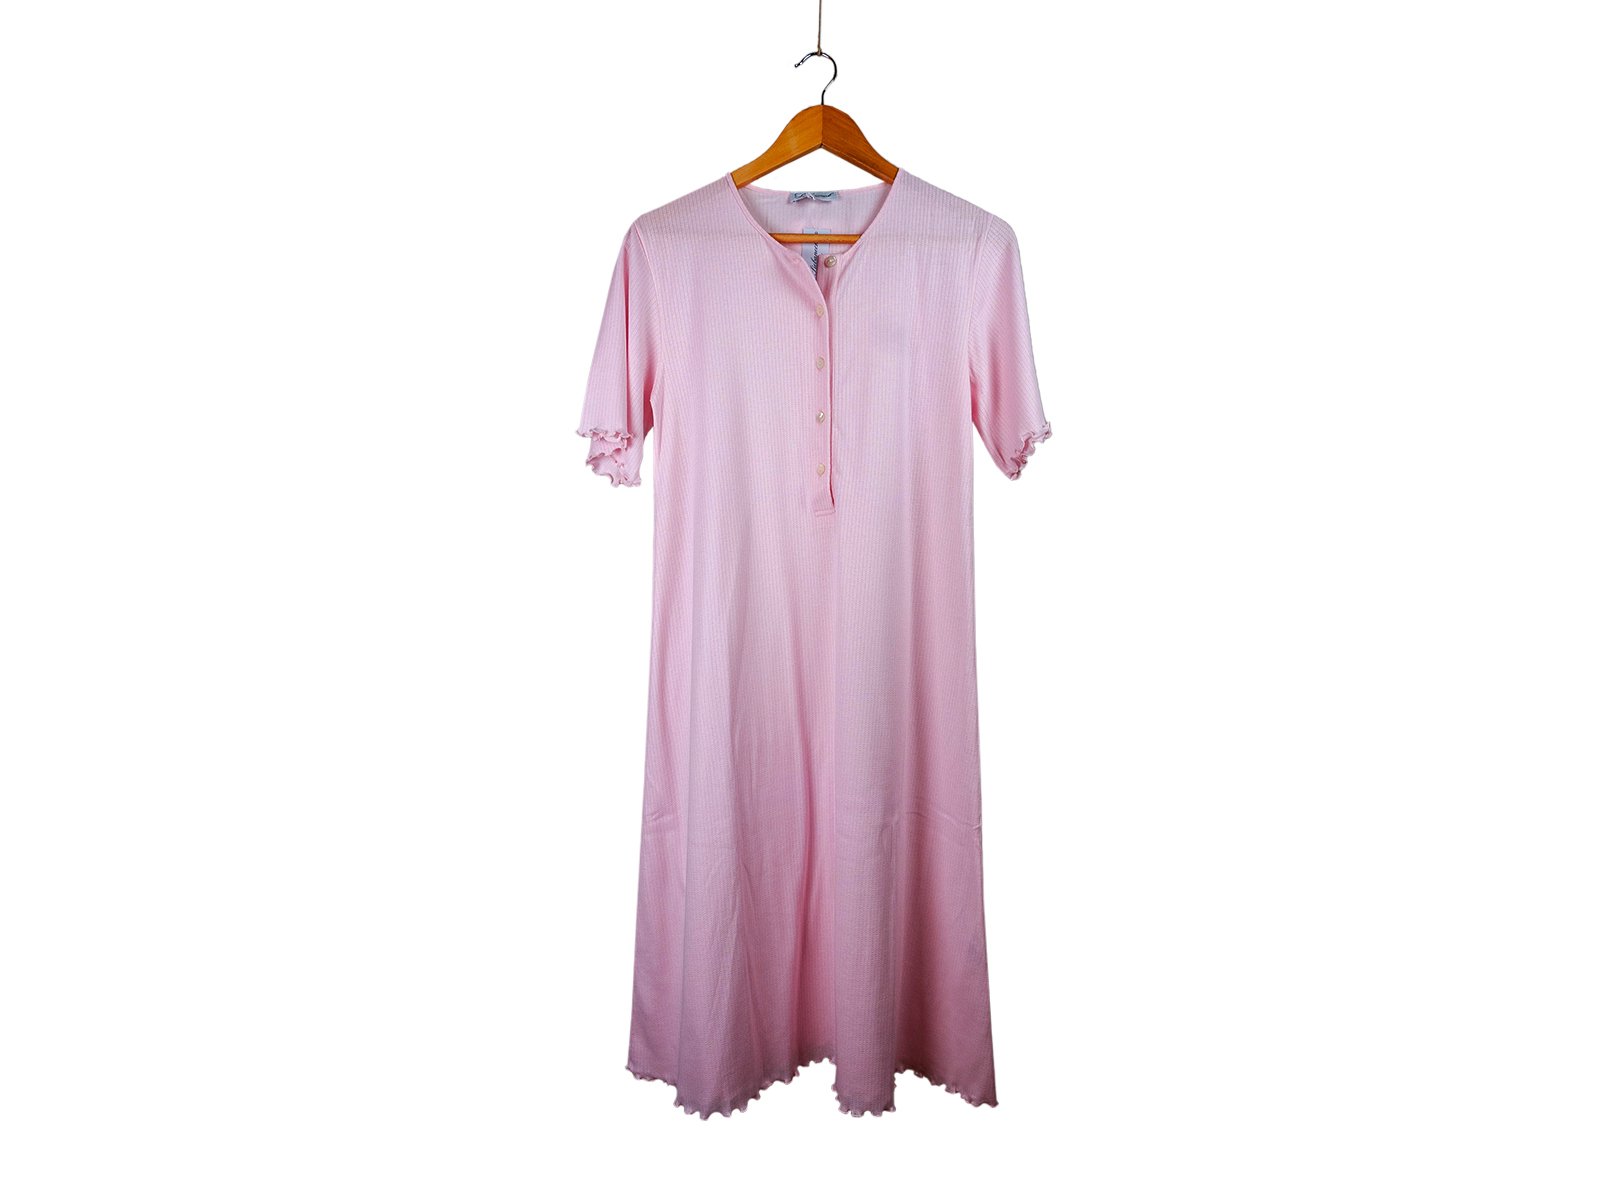 Siebaneck, i pigiami artigianali italiani: - donna - mod.7 DONNA rosa